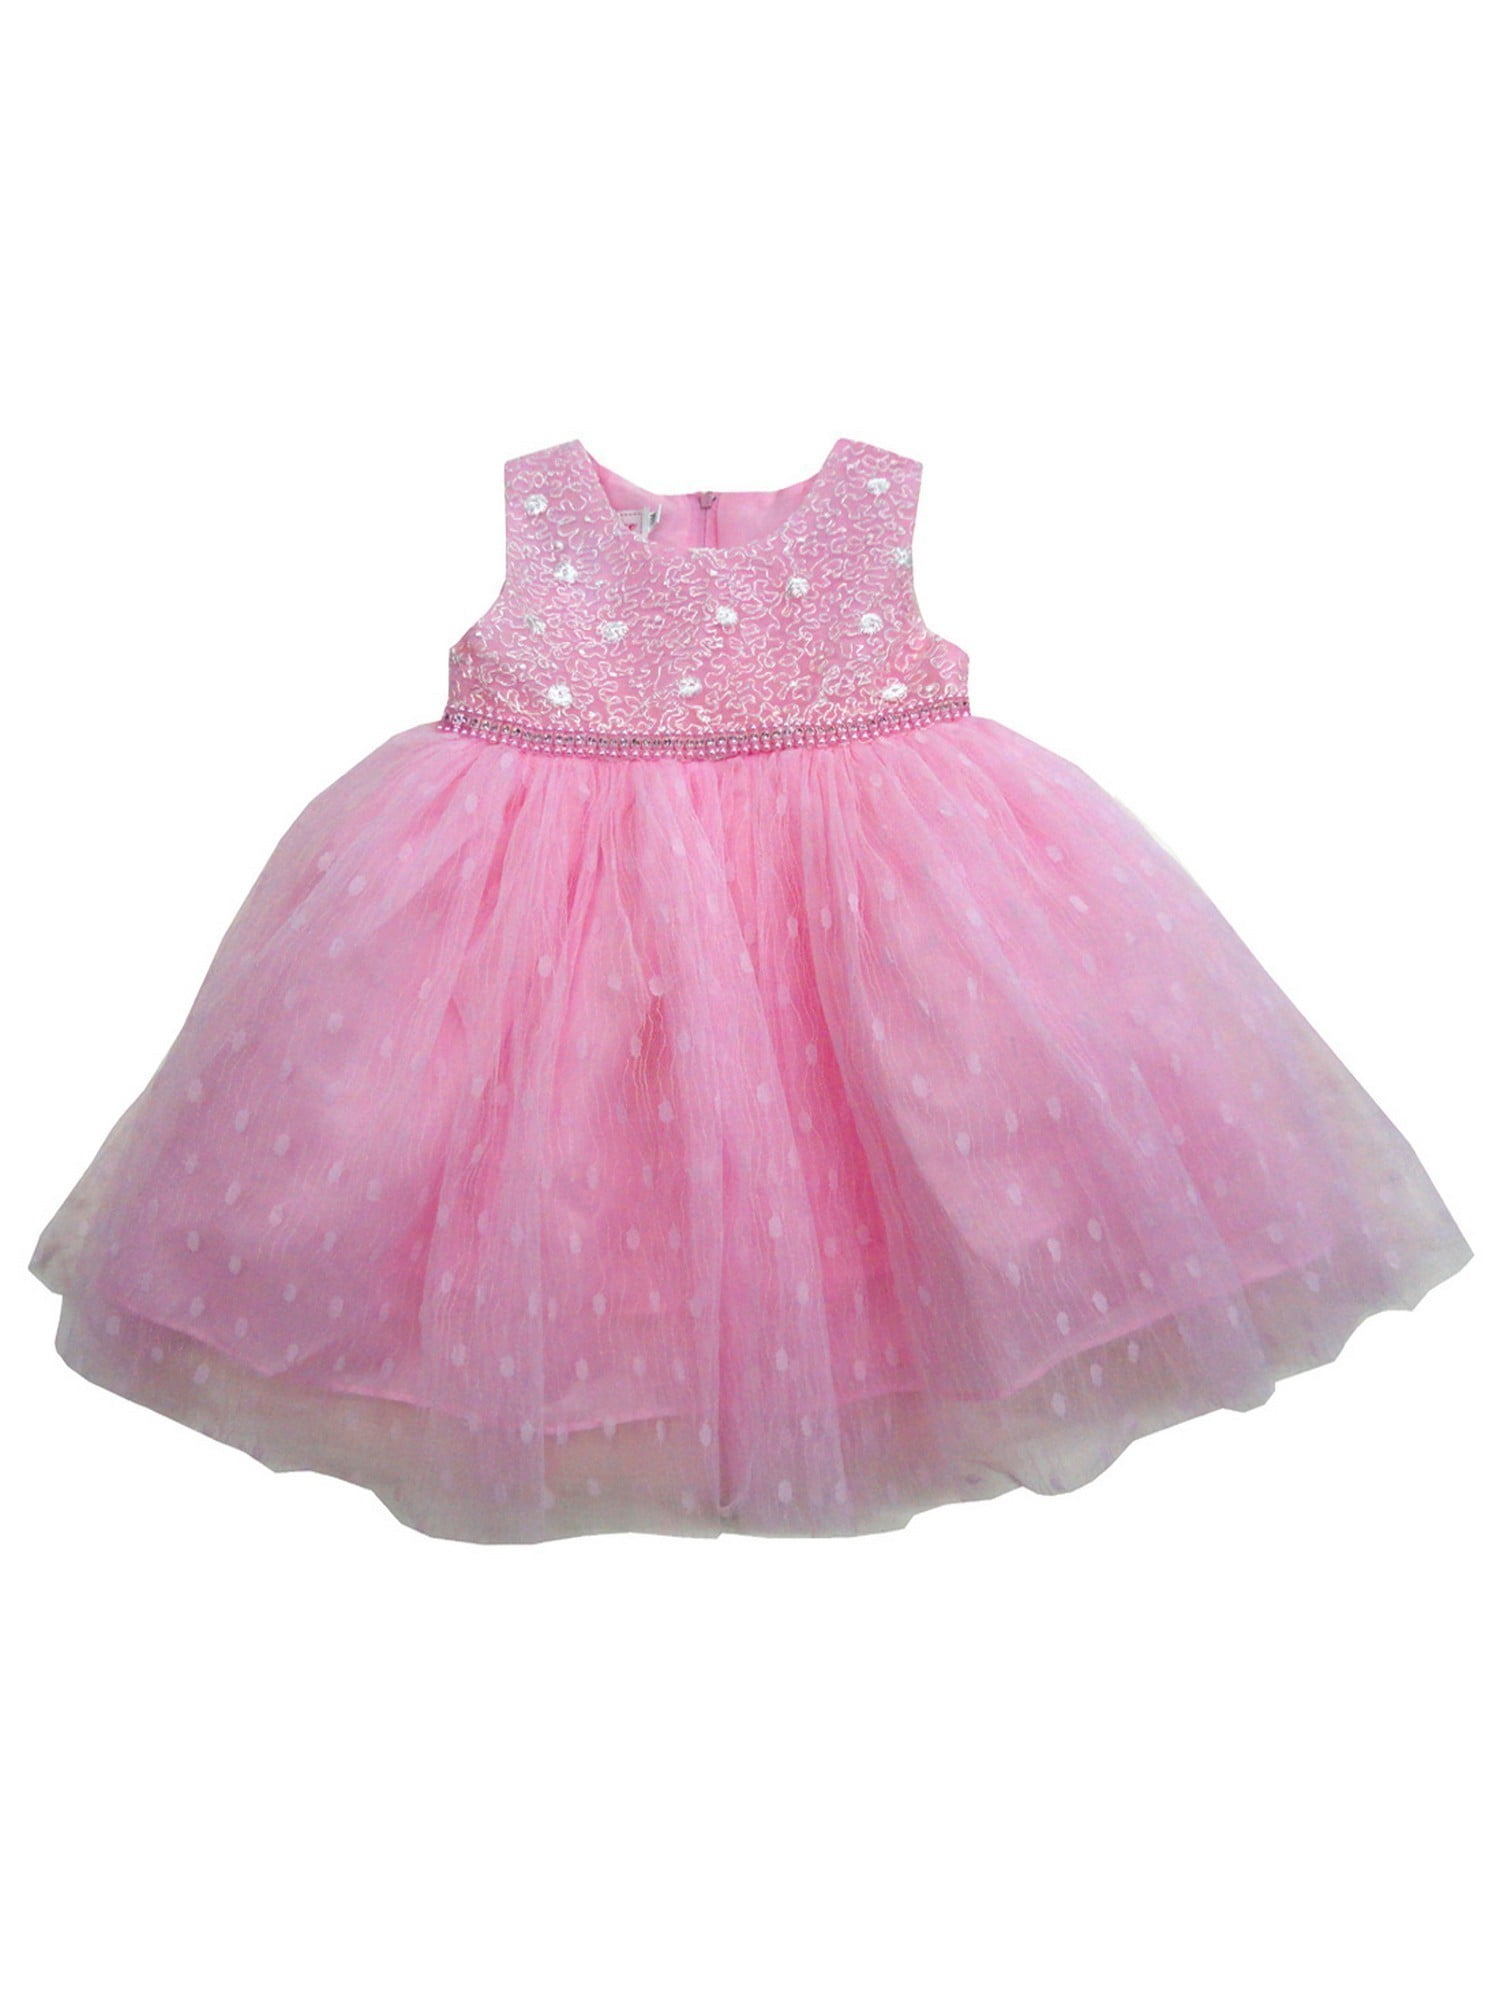 girls pink sparkly dress